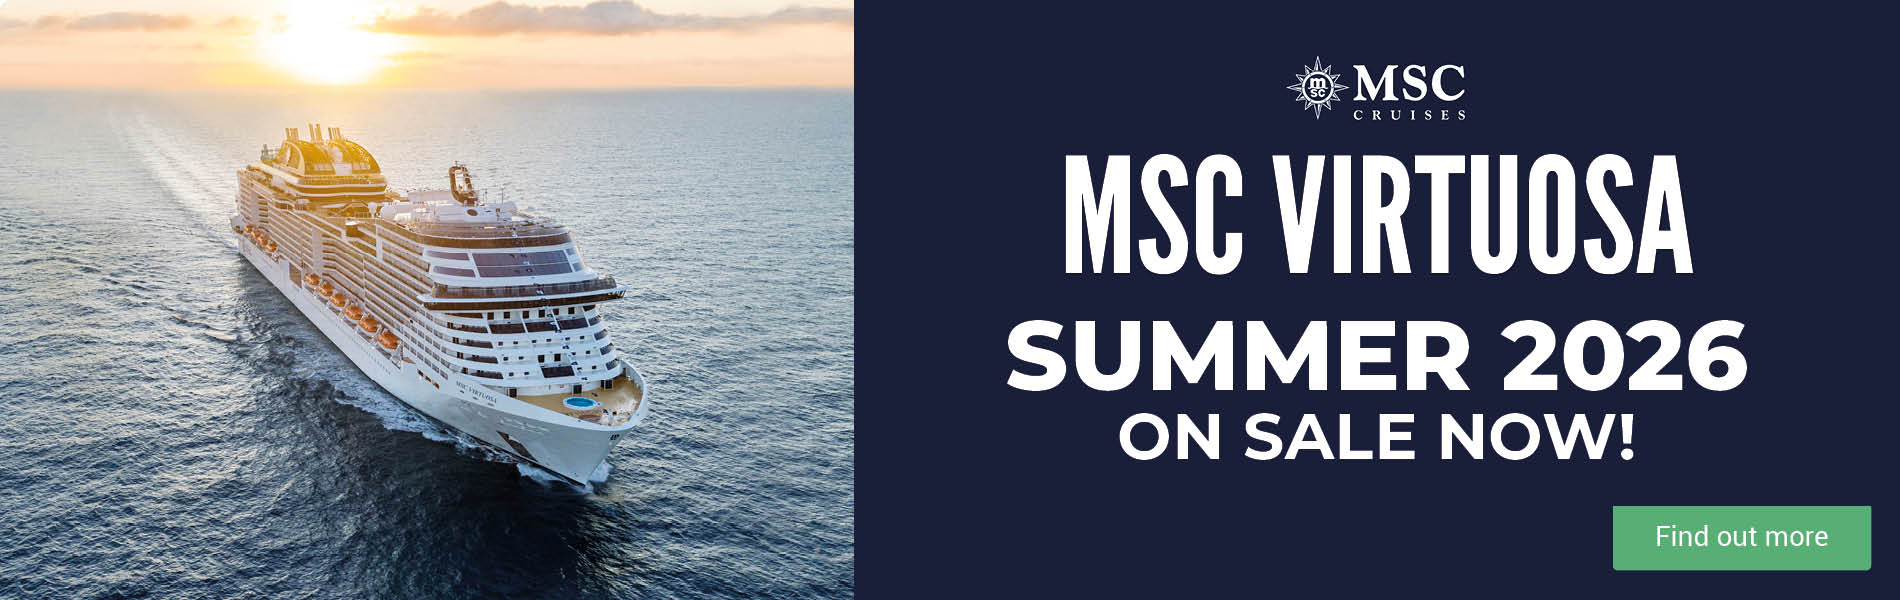 MSC Cruises Campaign